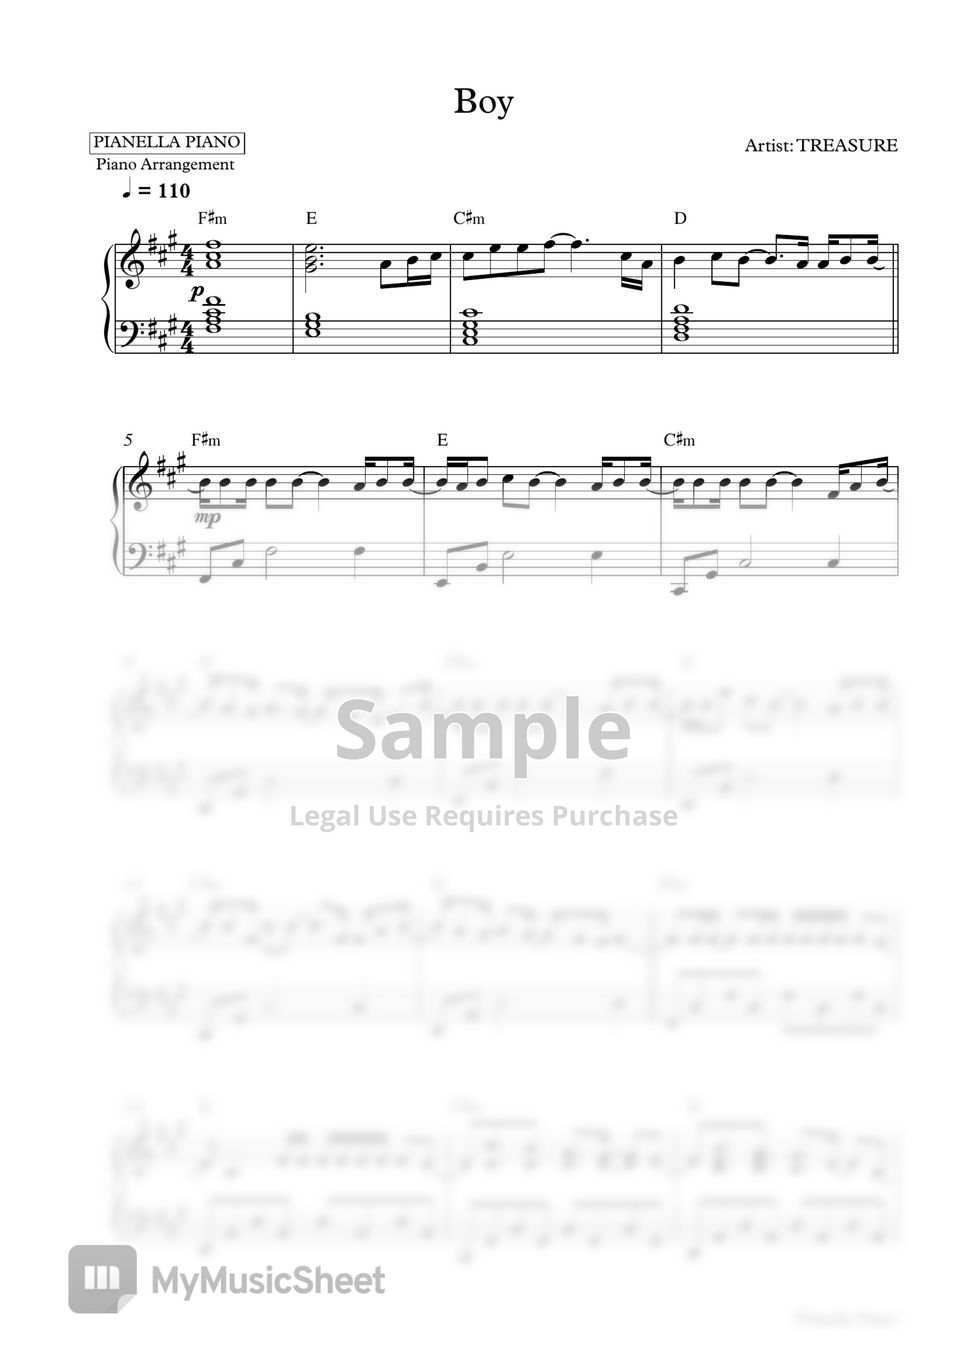 TREASURE - BOY (Piano Sheet) by Pianella Piano